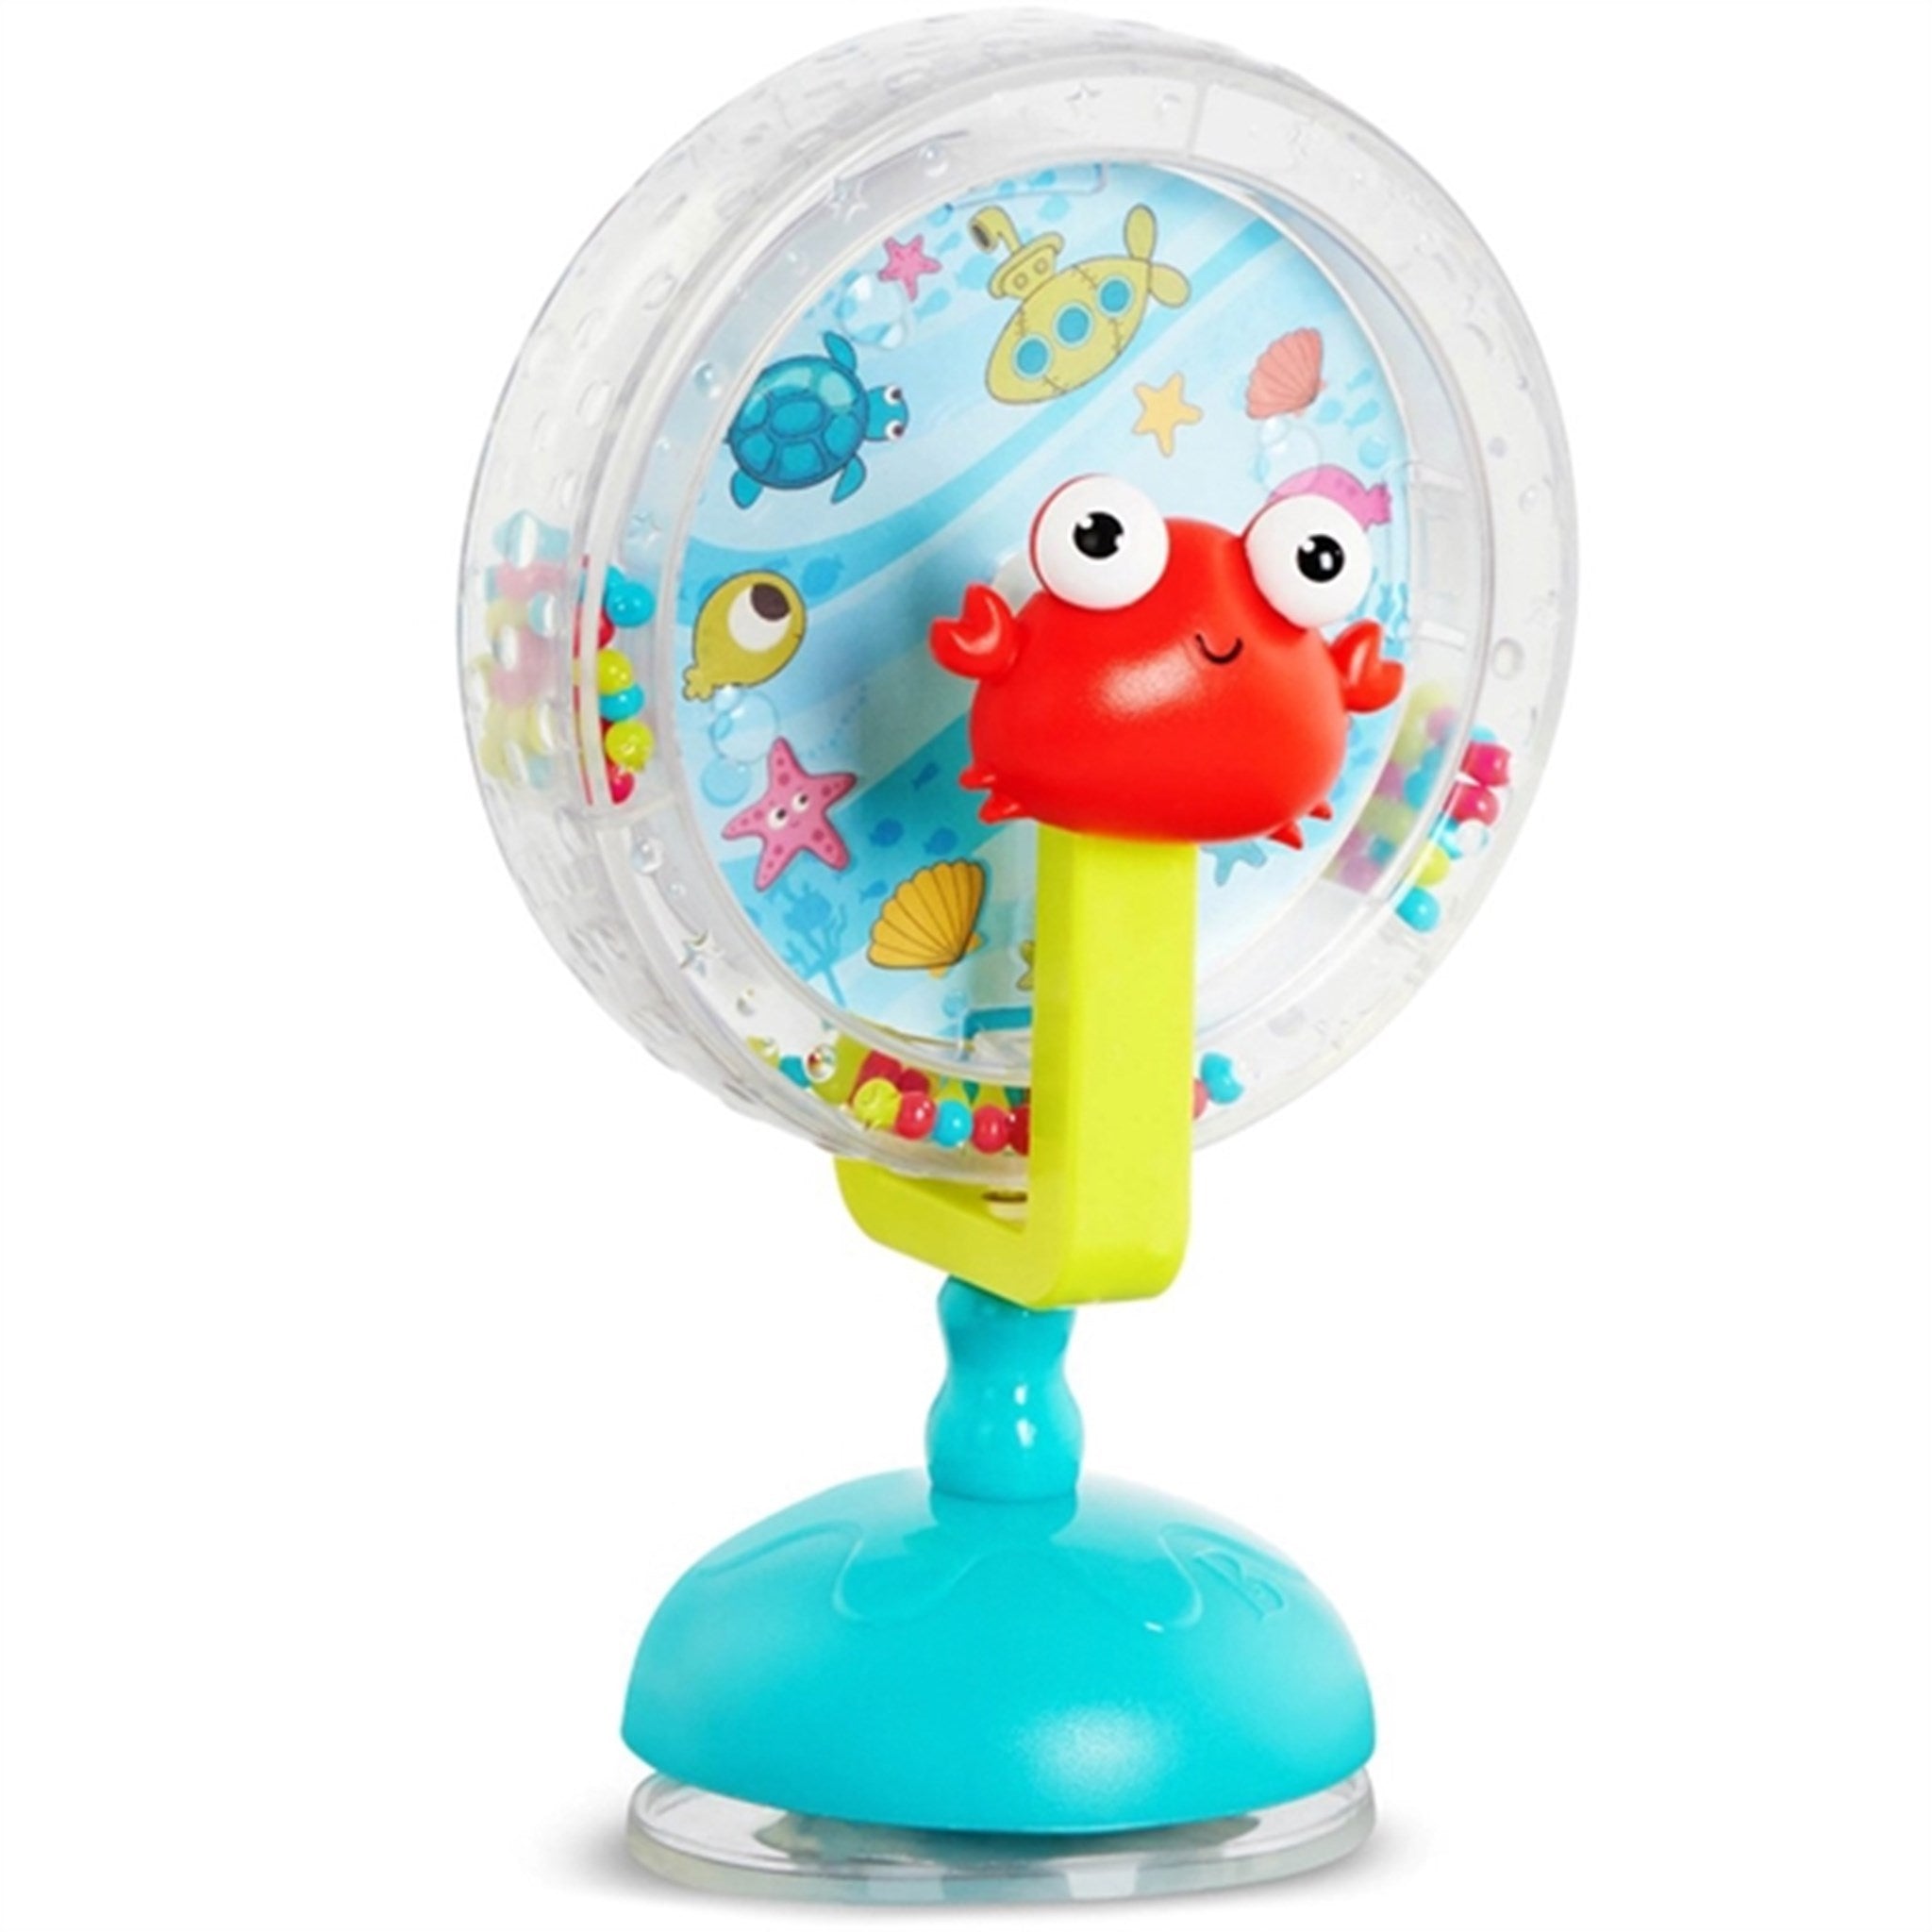 B-toys Whirly Wheel